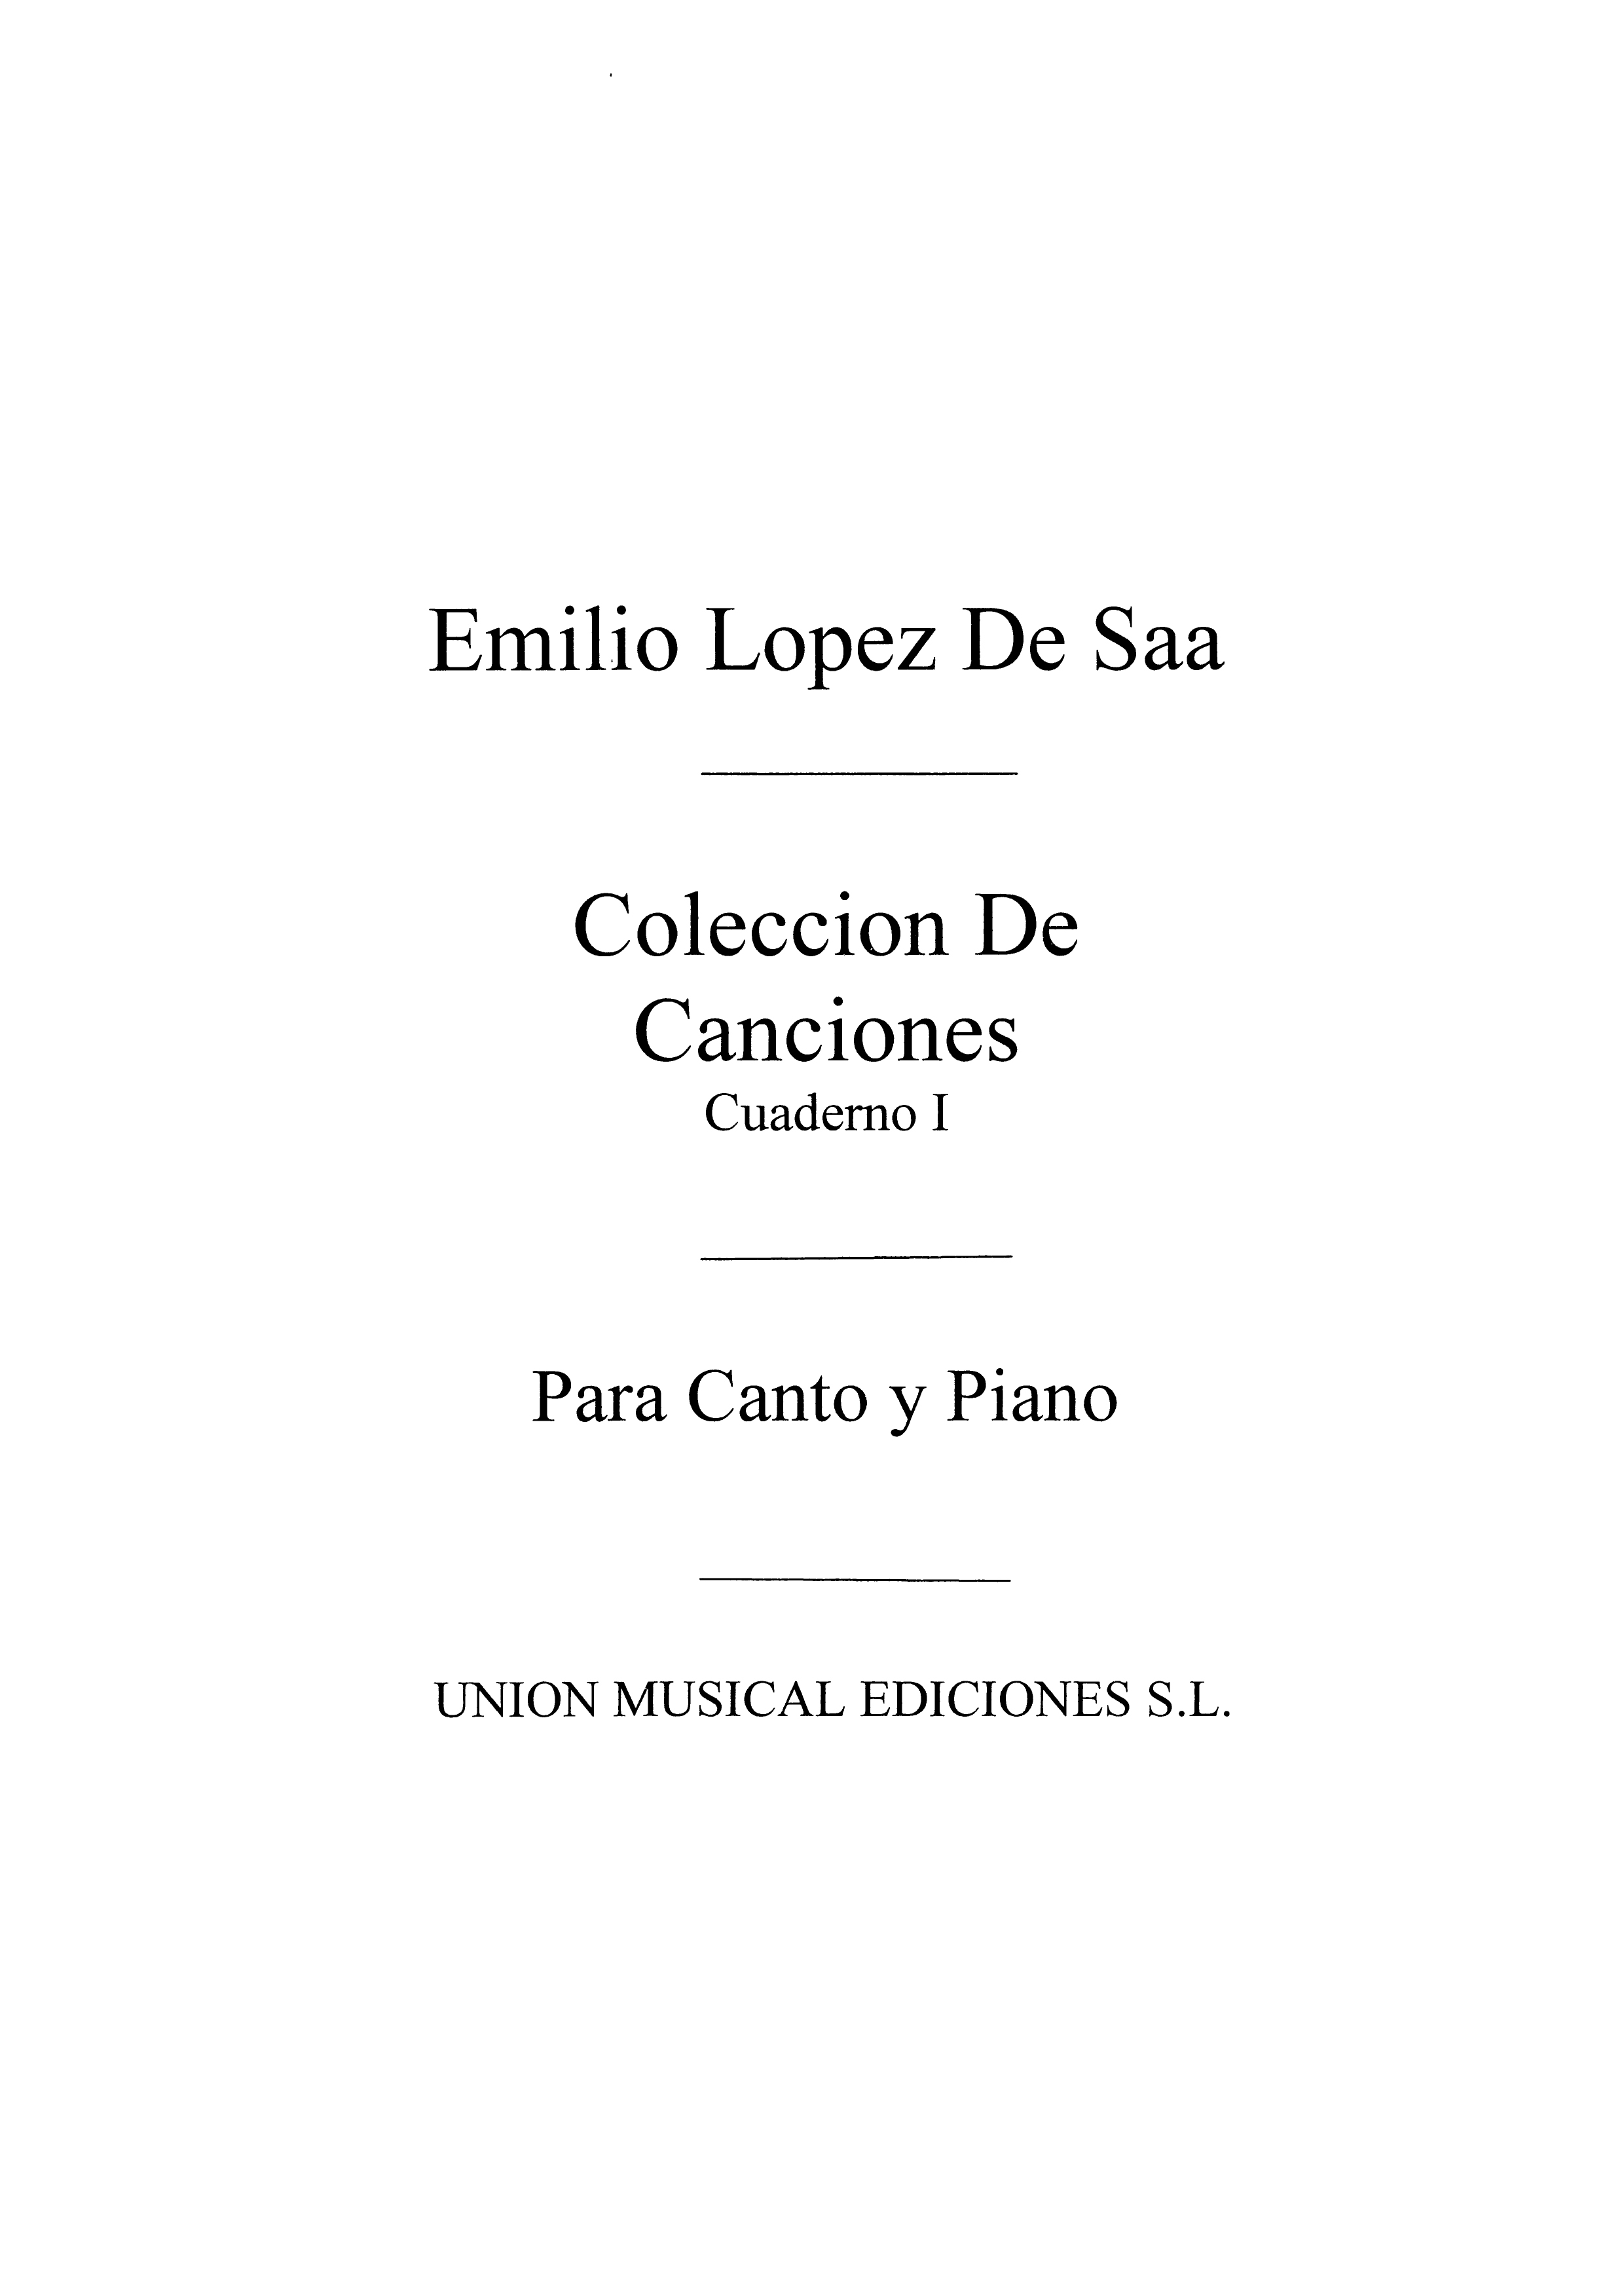 Emilio Lopez De Saa: Canciones Volume 1